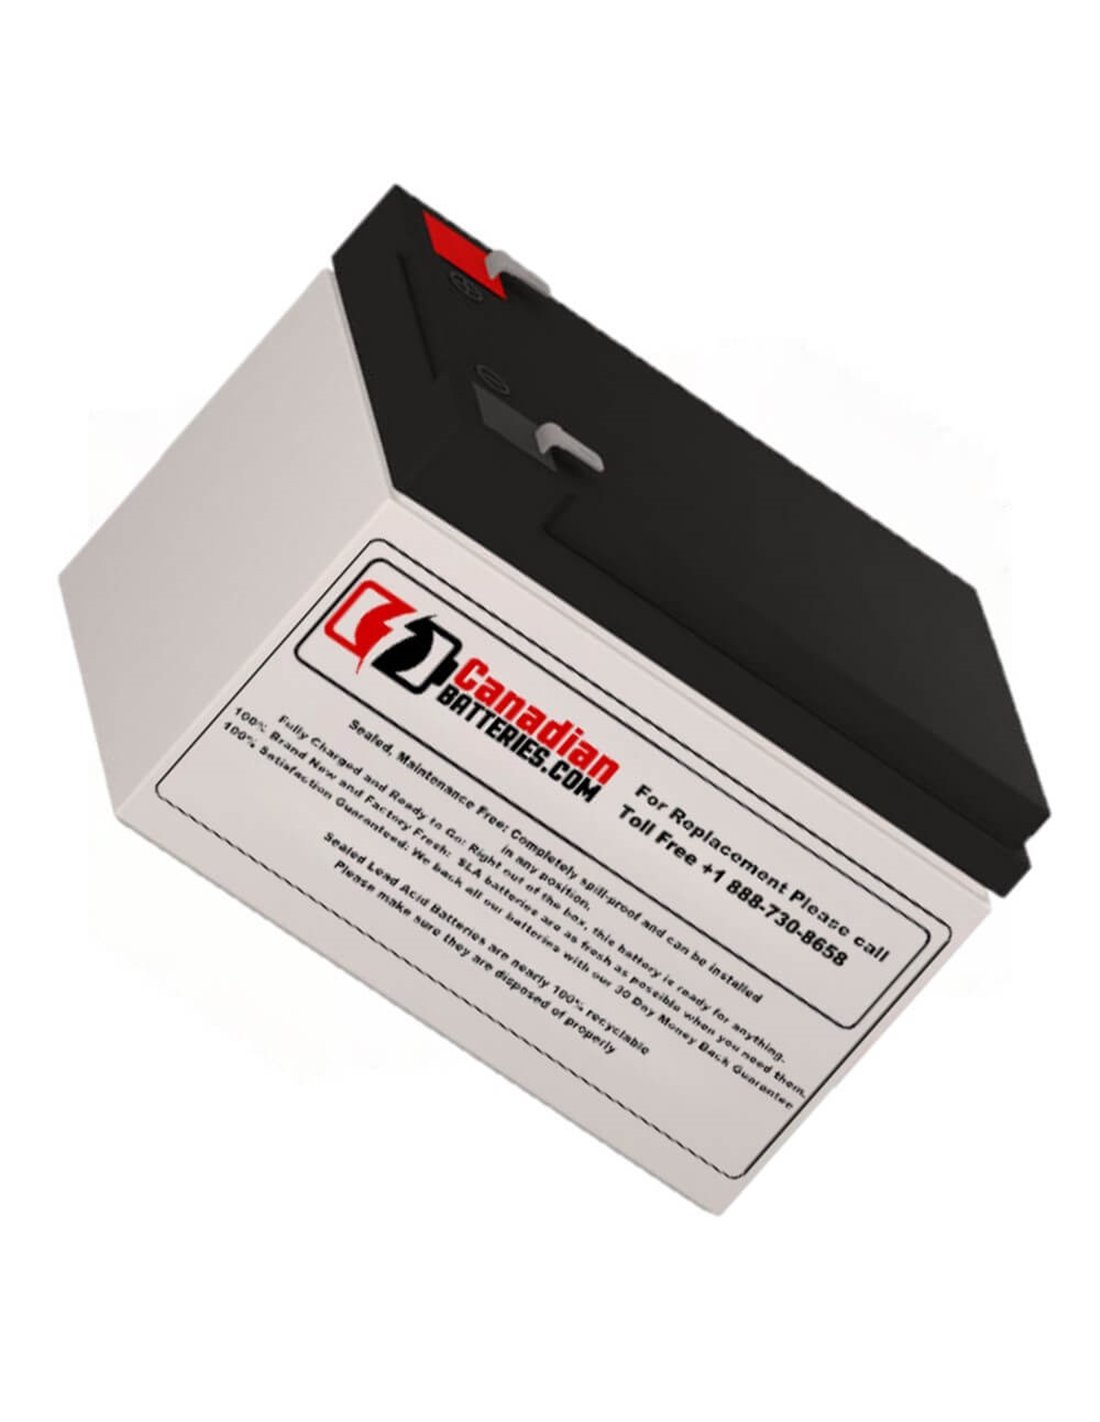 Battery for Powerware 03251000bat UPS, 1 x 12V, 12Ah - 144Wh